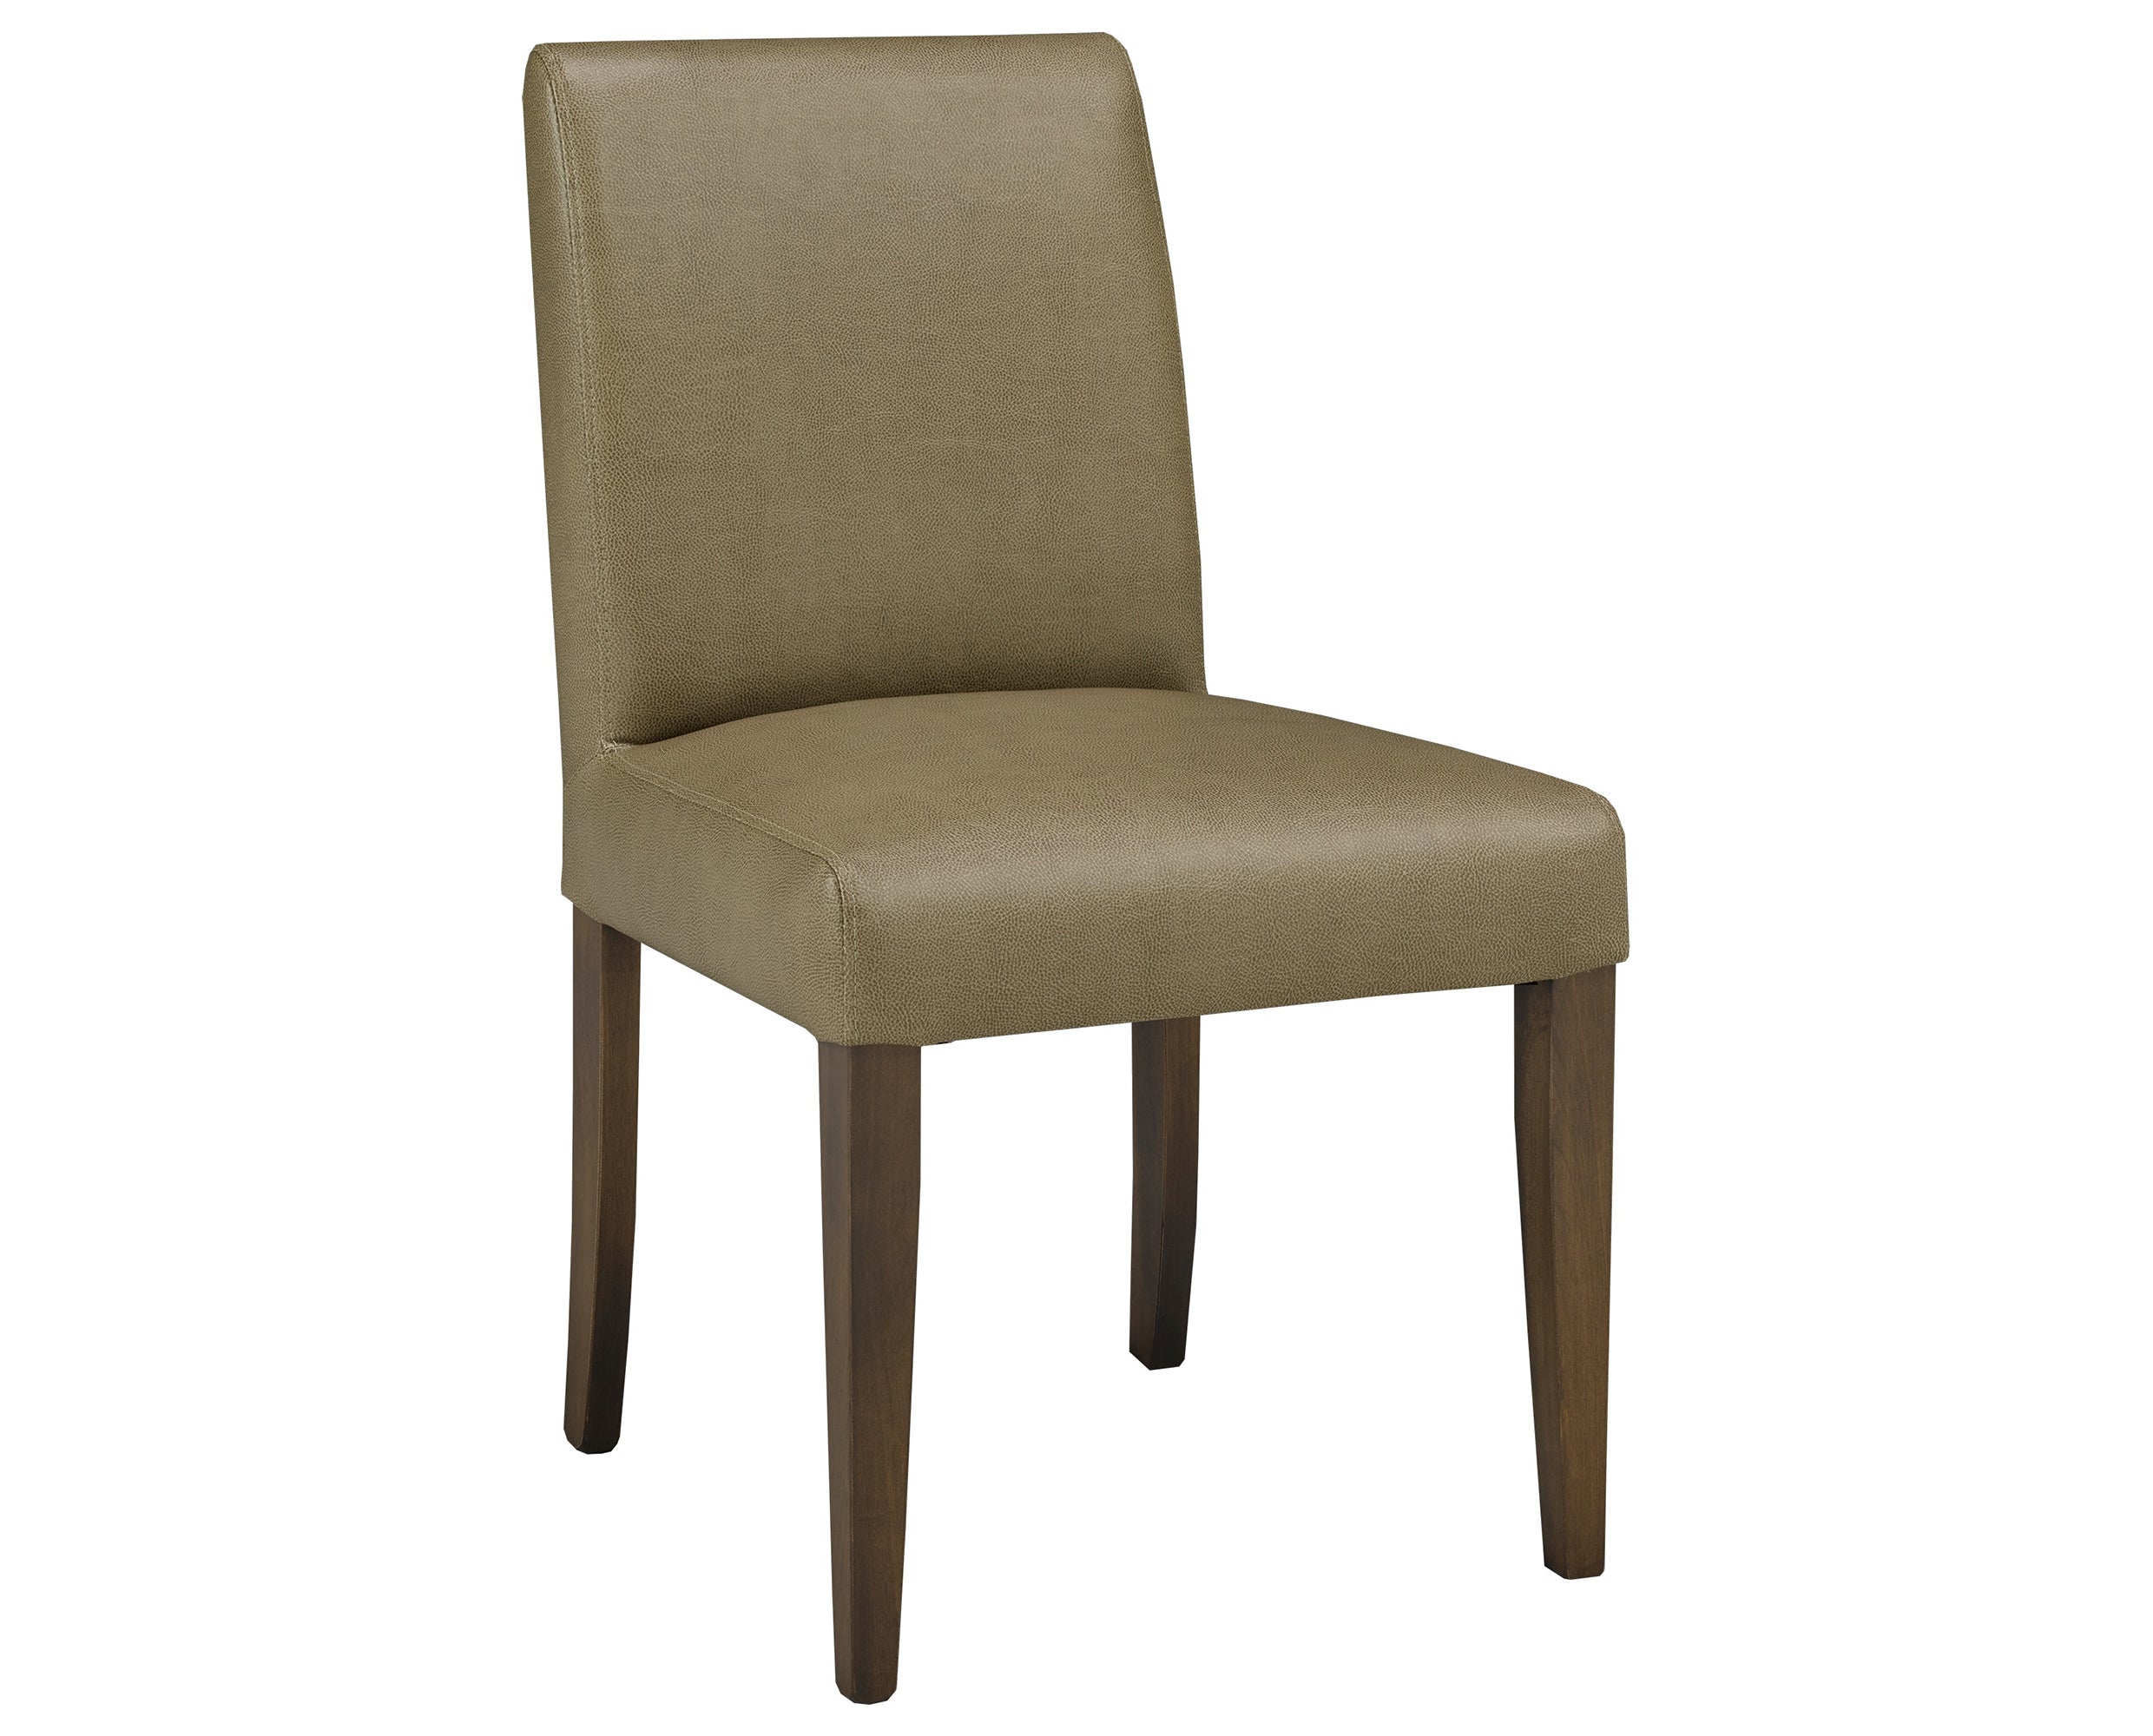 Chair as Shown | Cardinal Woodcraft Swift Dining Chair | Valley Ridge Furniture